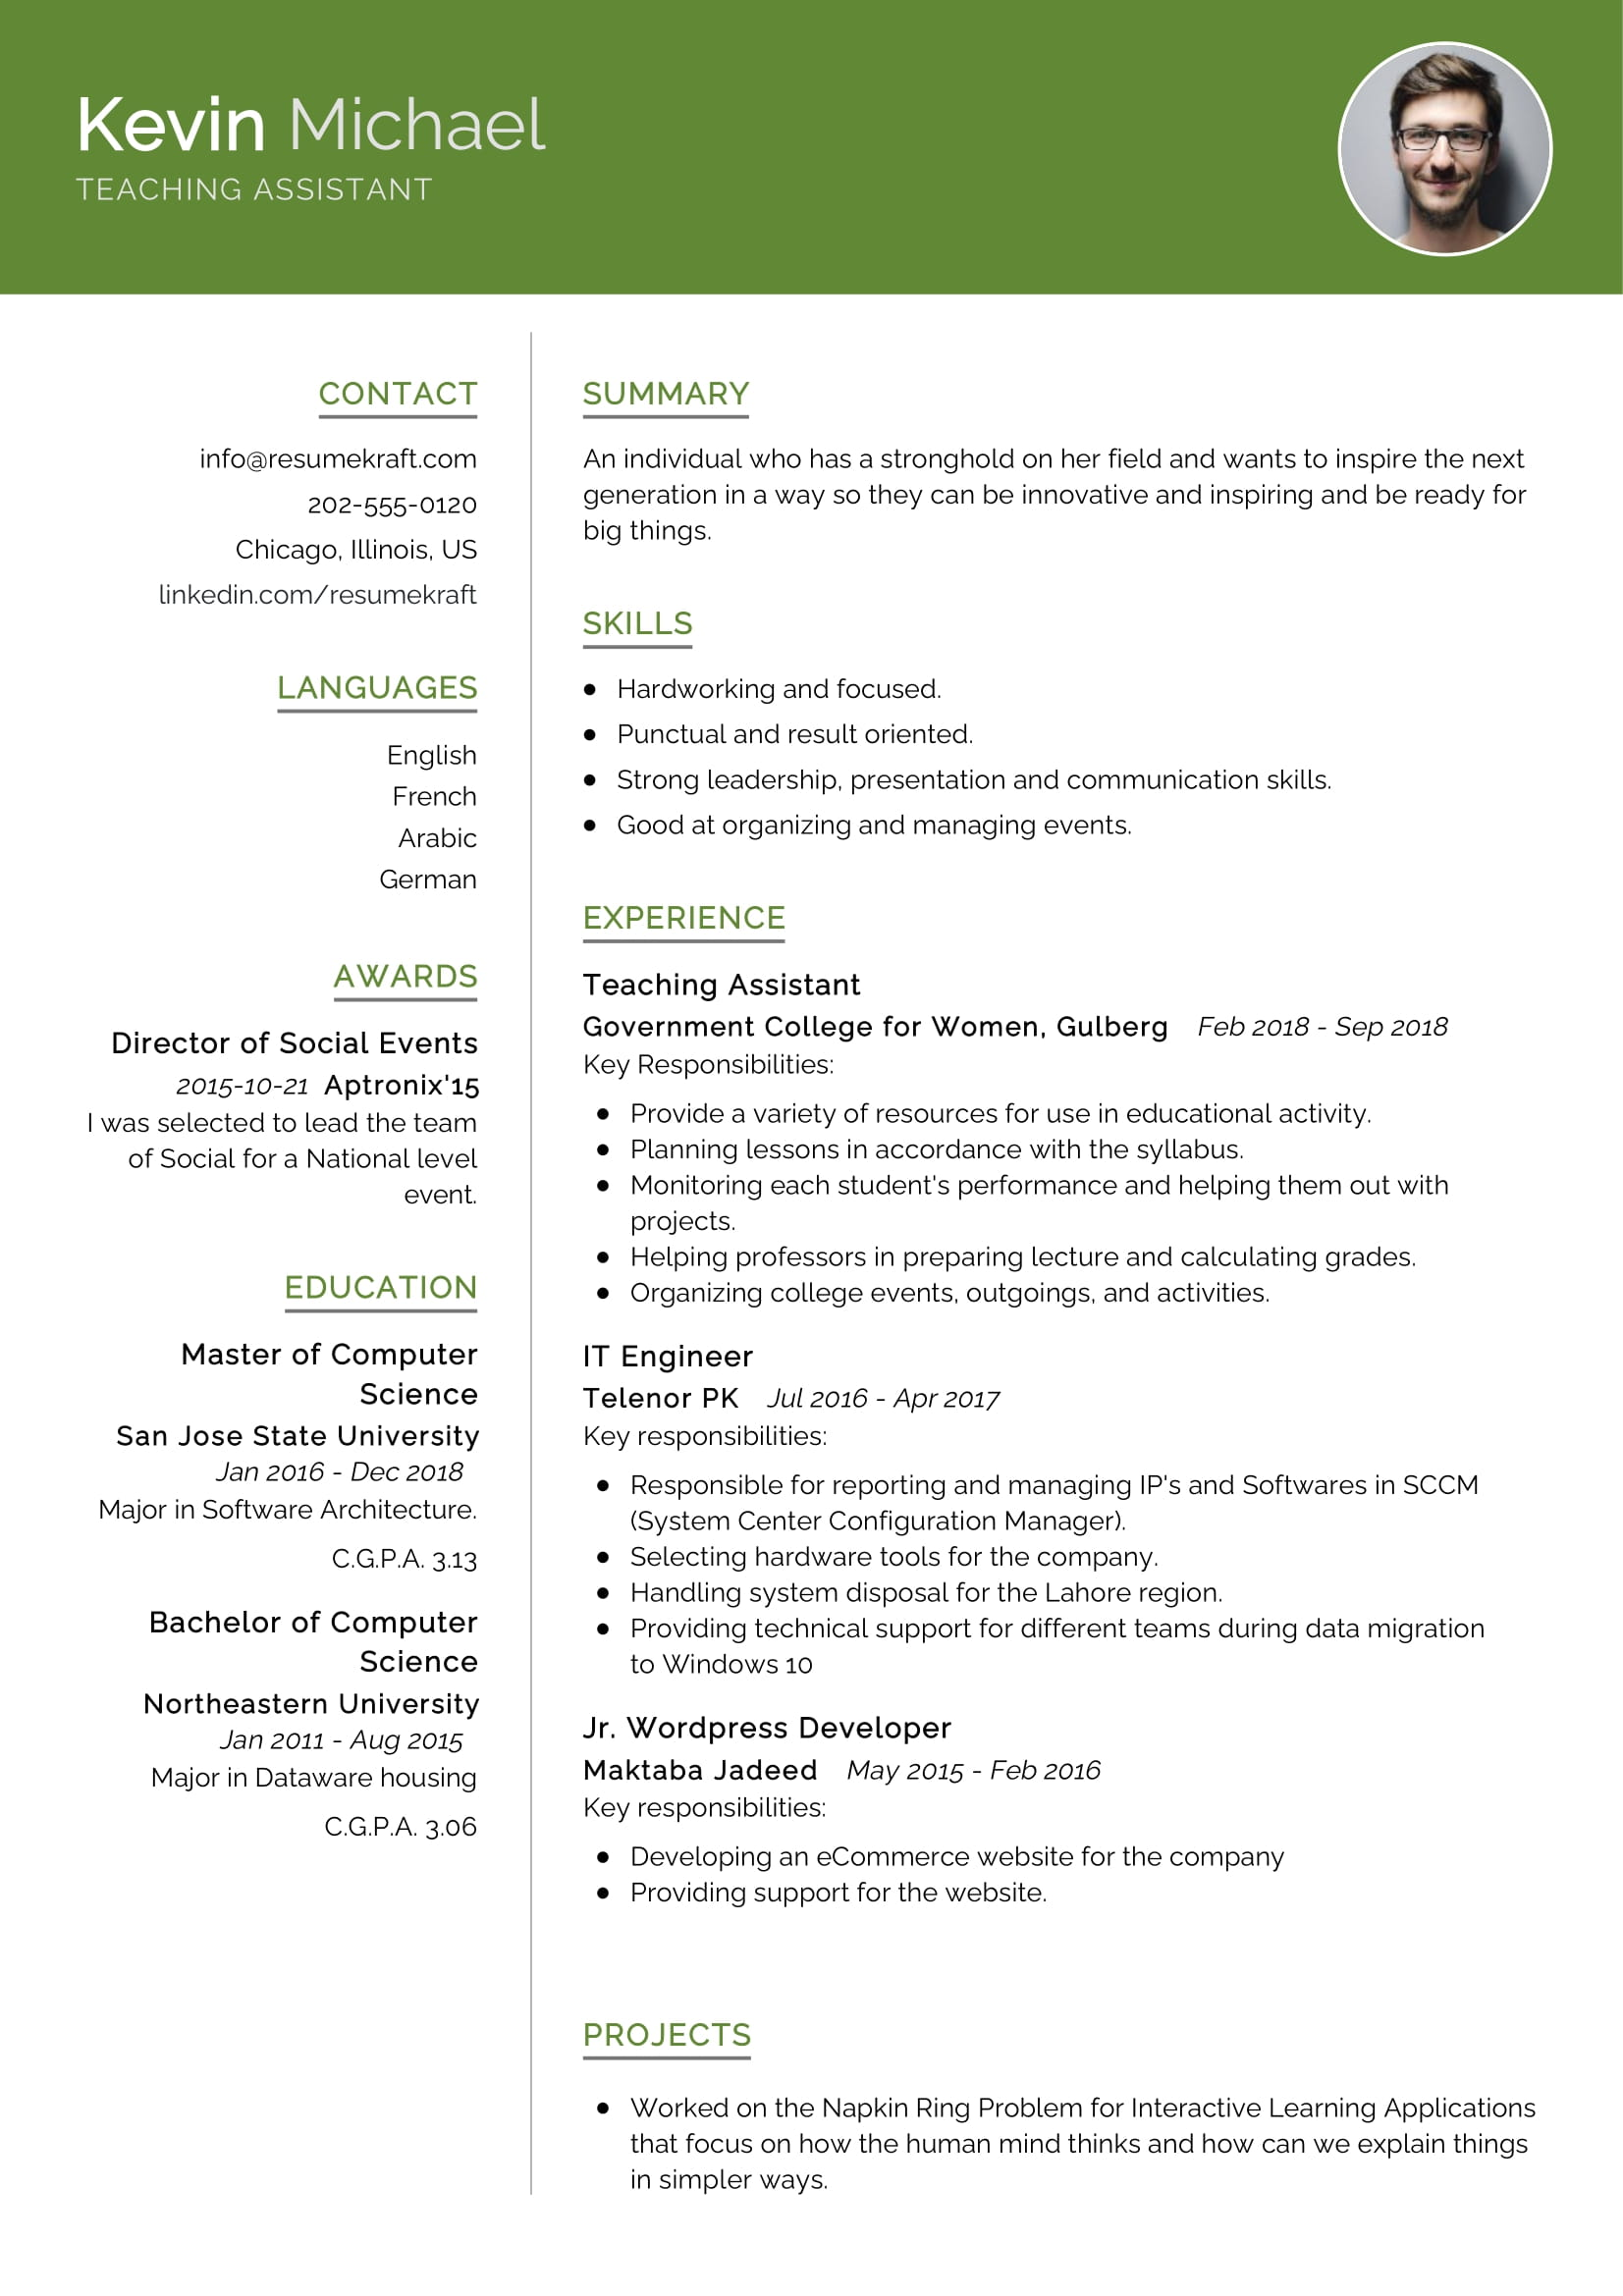 resume format for teacher job interview